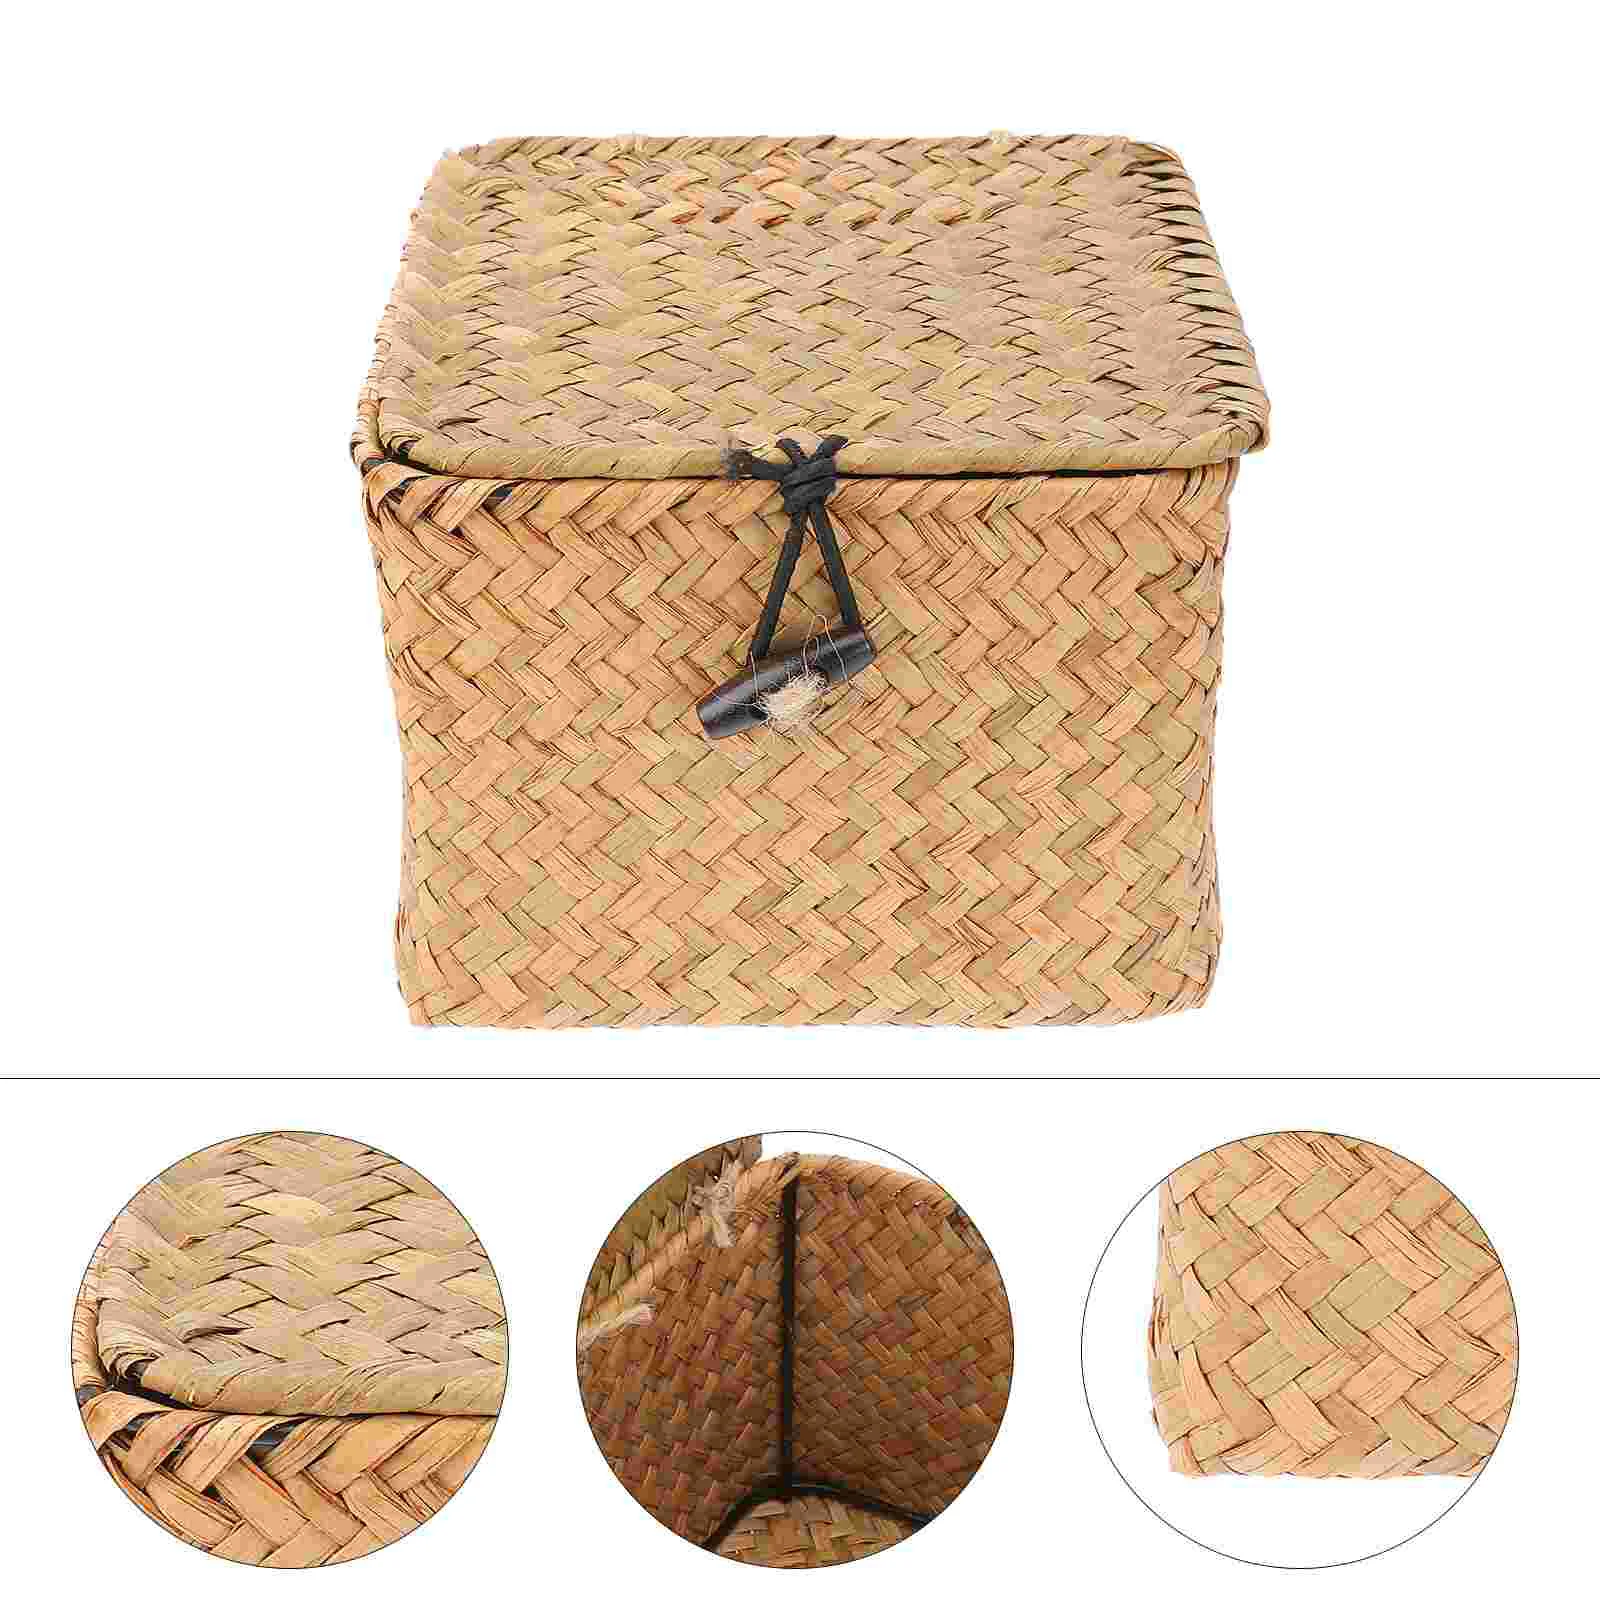 

Small Seagrass Storage Basket with Lids Rattan Organizer Baskets Tea Box Tea Storage Box Sundries Container Desk Basket Bins